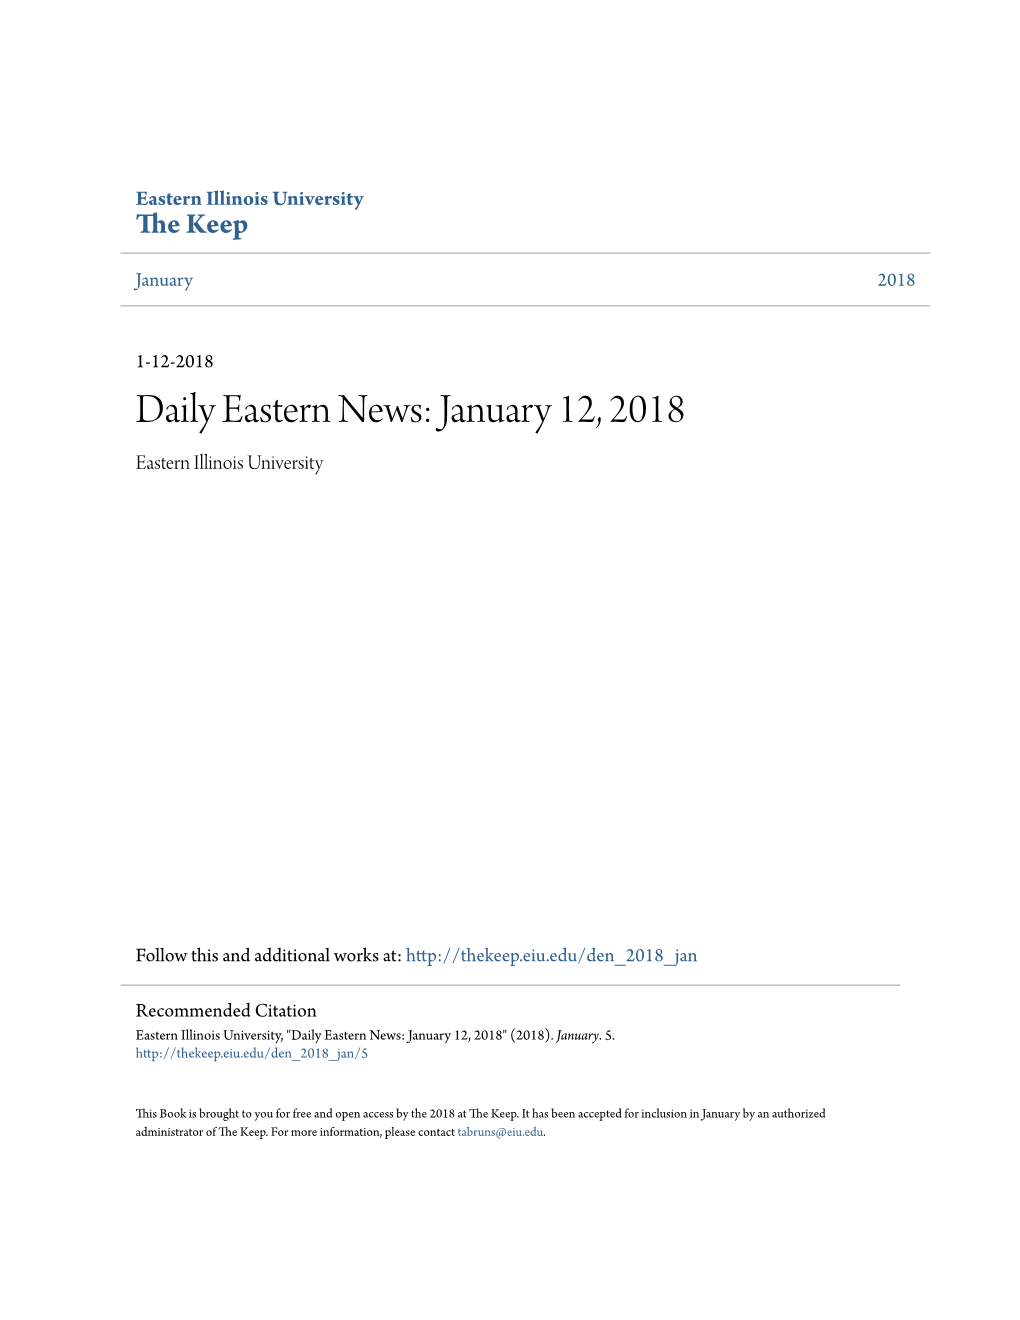 Daily Eastern News: January 12, 2018 Eastern Illinois University